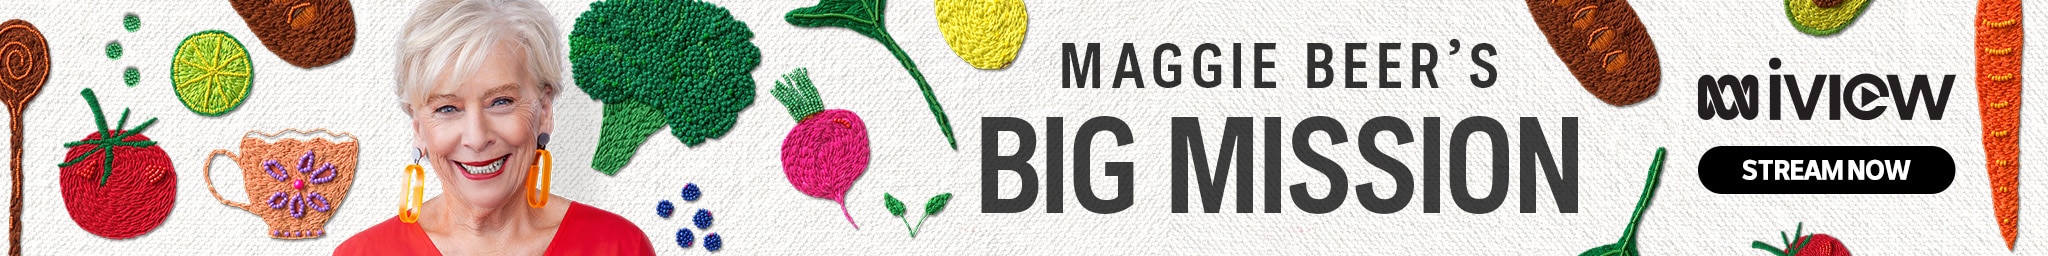 Maggie Beer's Big Mission iview banner